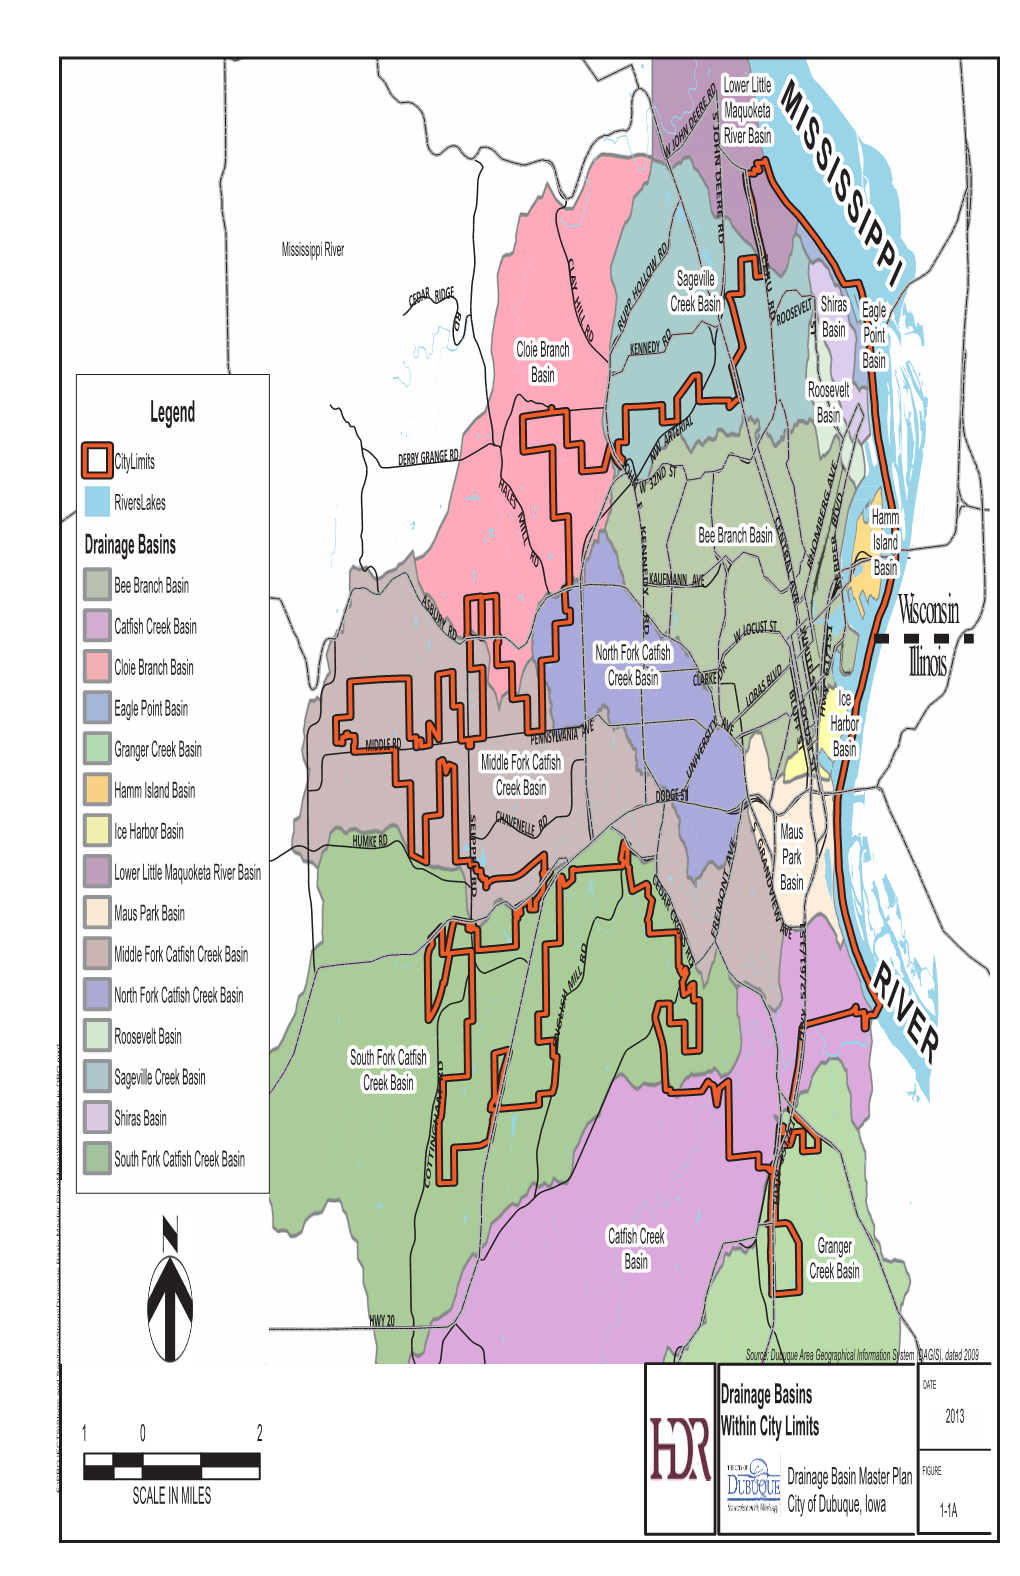 Drainage Basin Master Plan Amendment